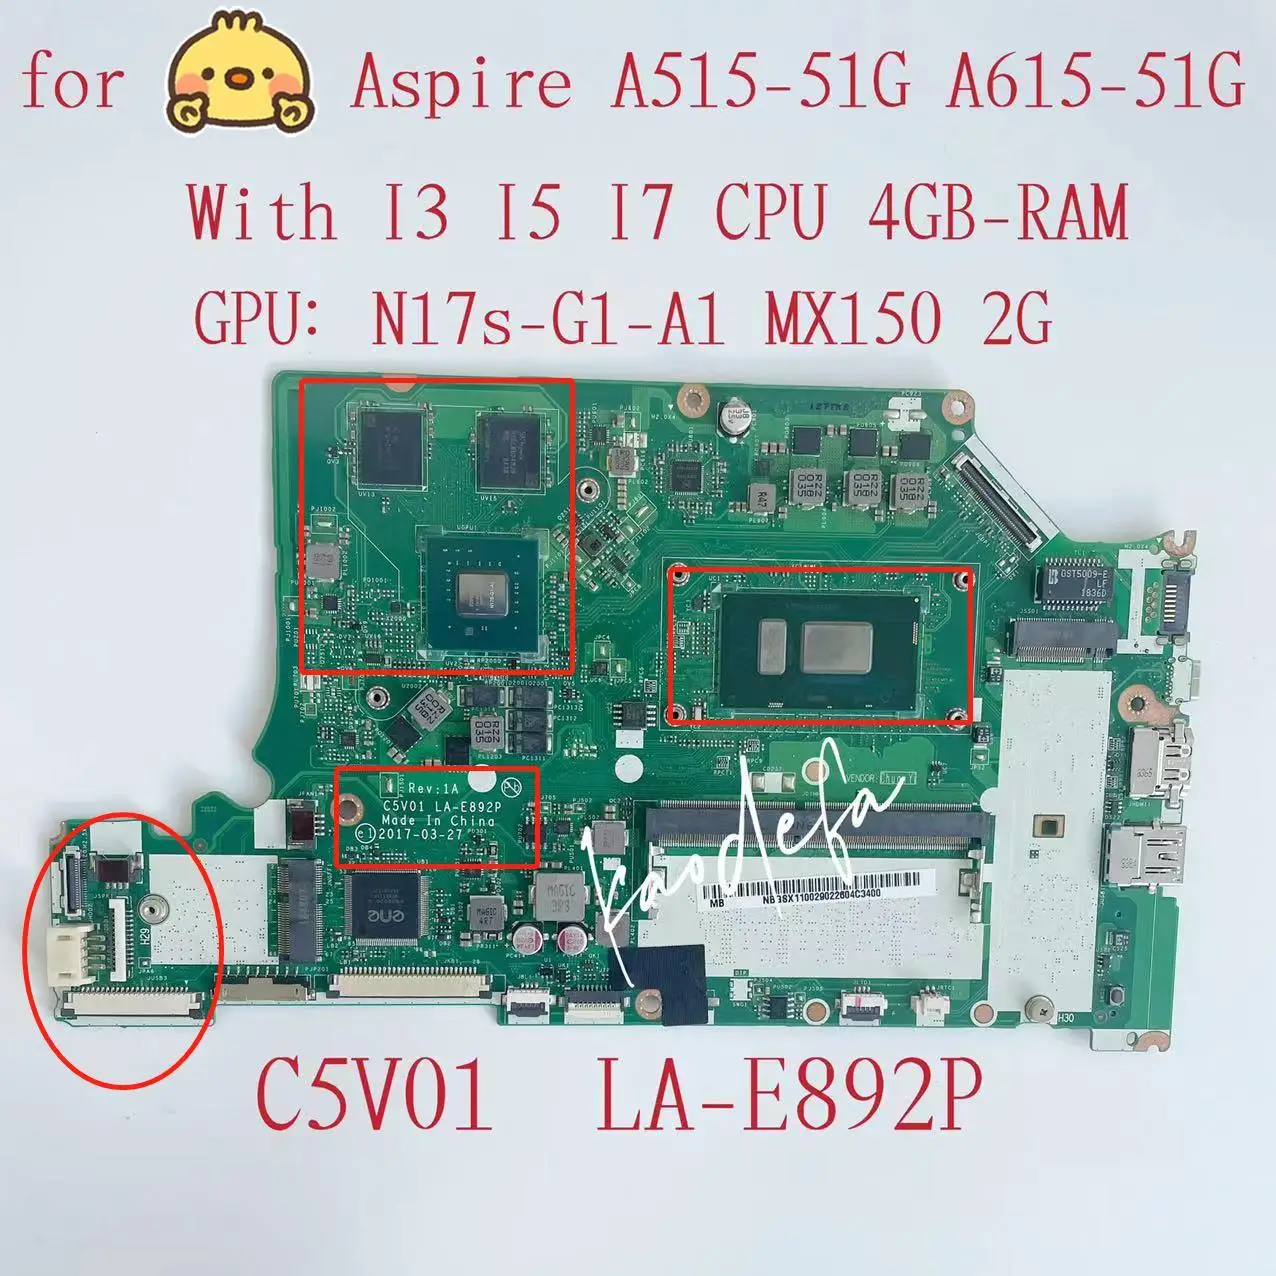 

Материнская плата C5V01 для ноутбука Acer Aspire LA-E892P, материнская плата для ноутбука с процессором i3 i5 i7, графический процессор: A515-51G 150, 2 Гб ОЗУ: 4 Г...